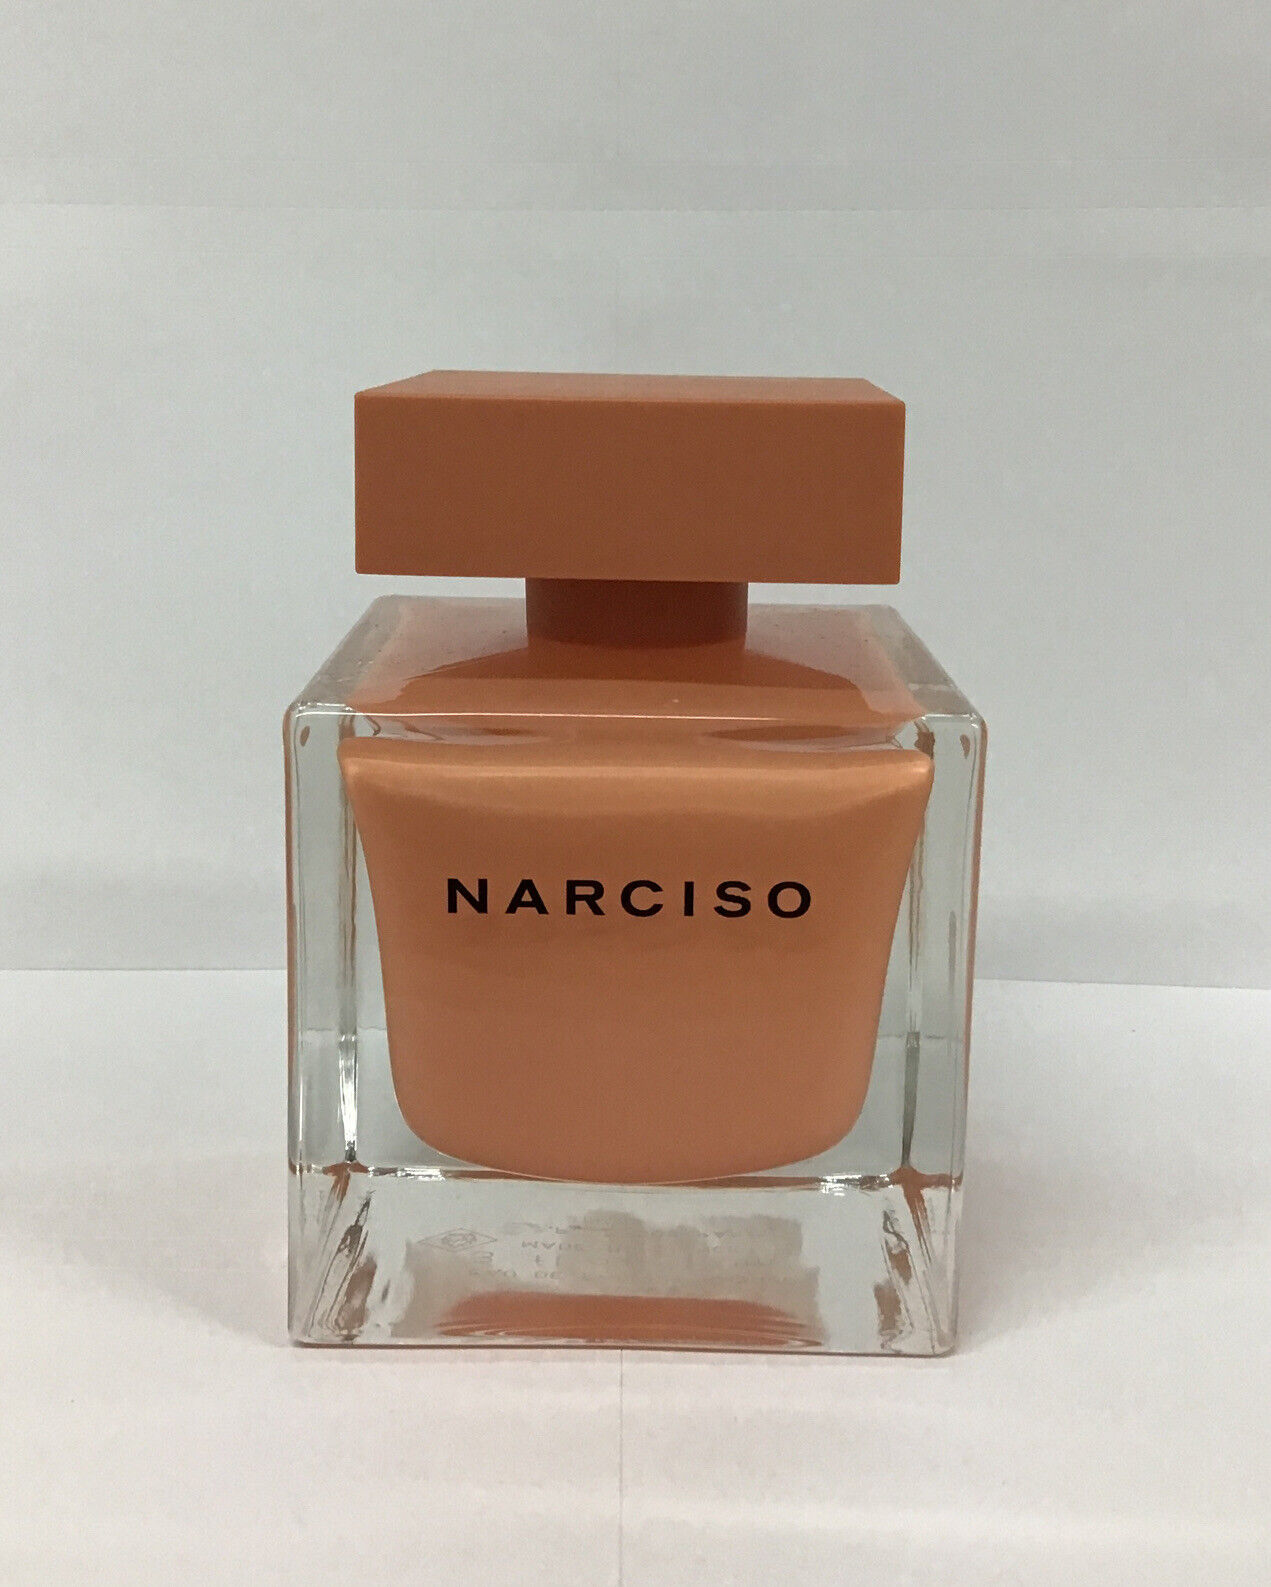 Narciso Ambree By Narciso Rodriguez Eau De Parfum Spray 3 Fl Oz, As Pictured.